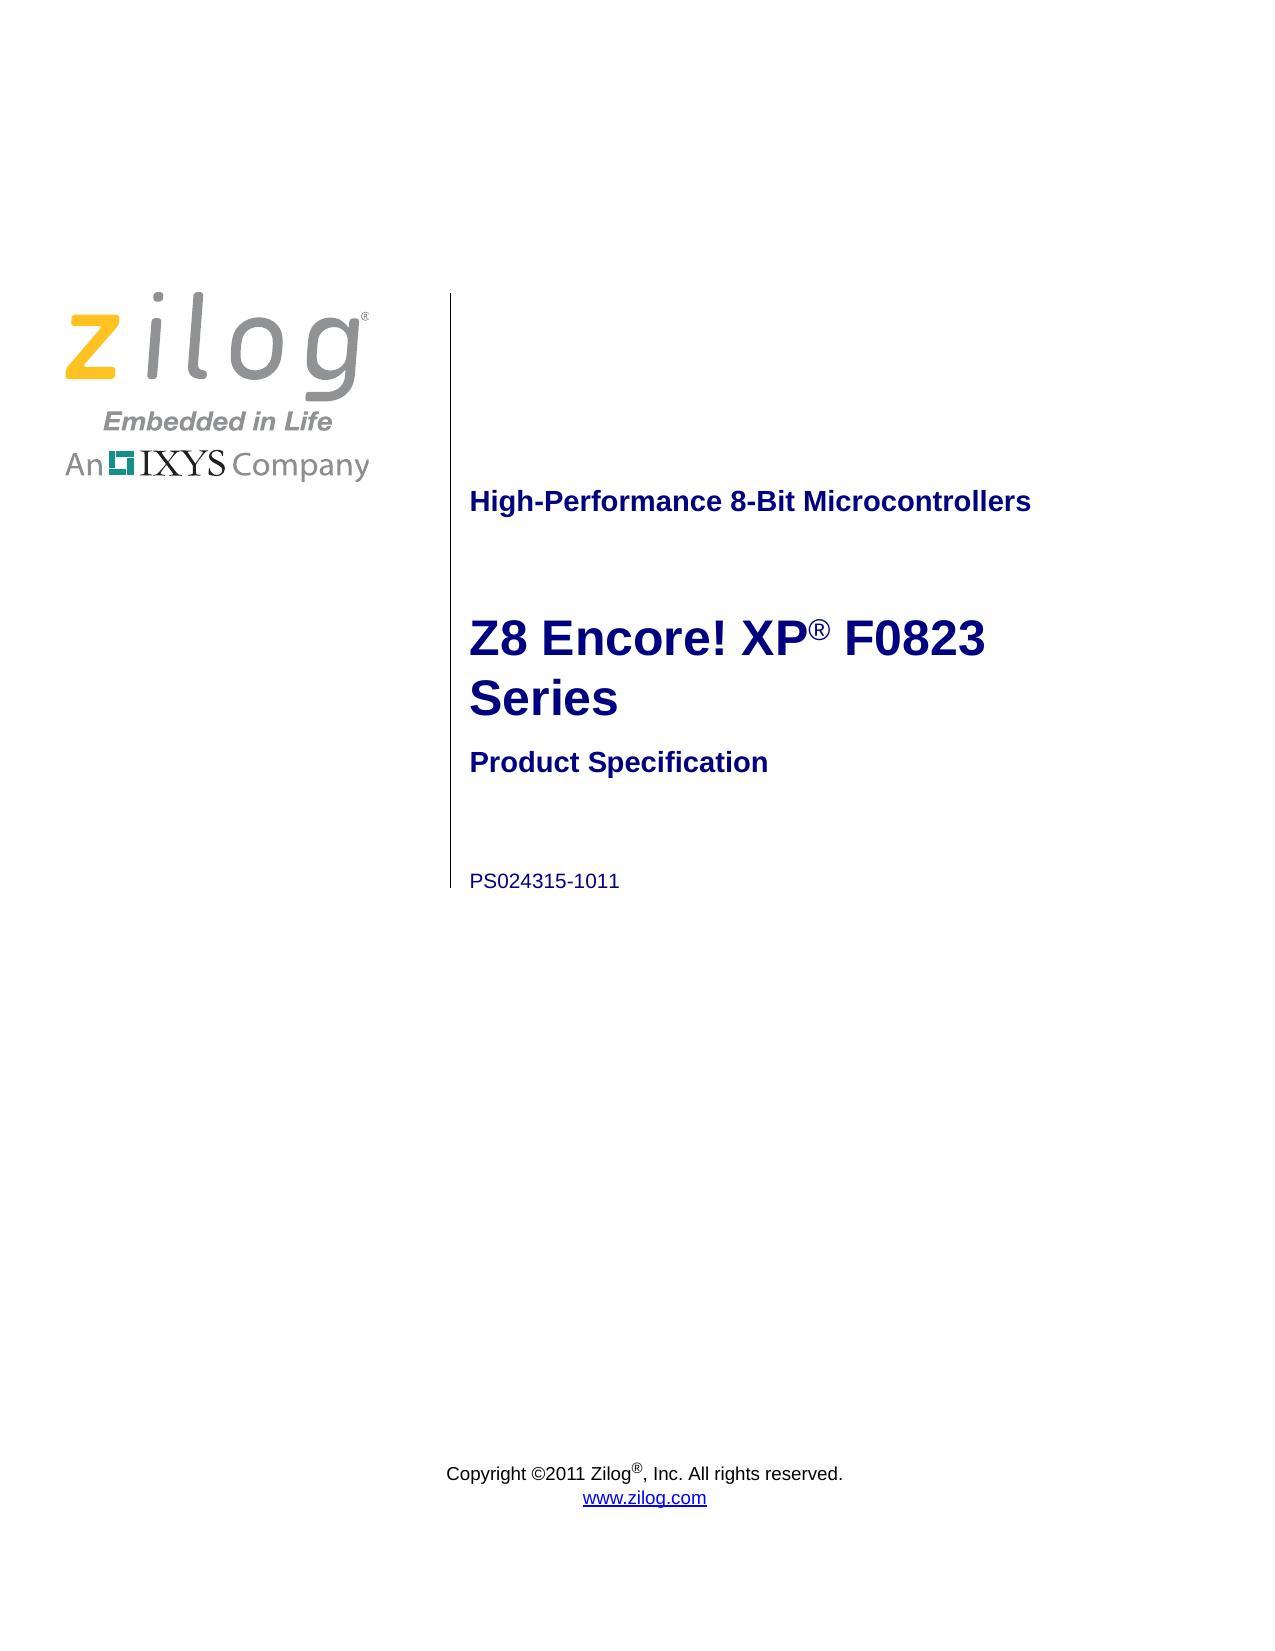 28-encorel-xp-f0823-series-product-specification.pdf